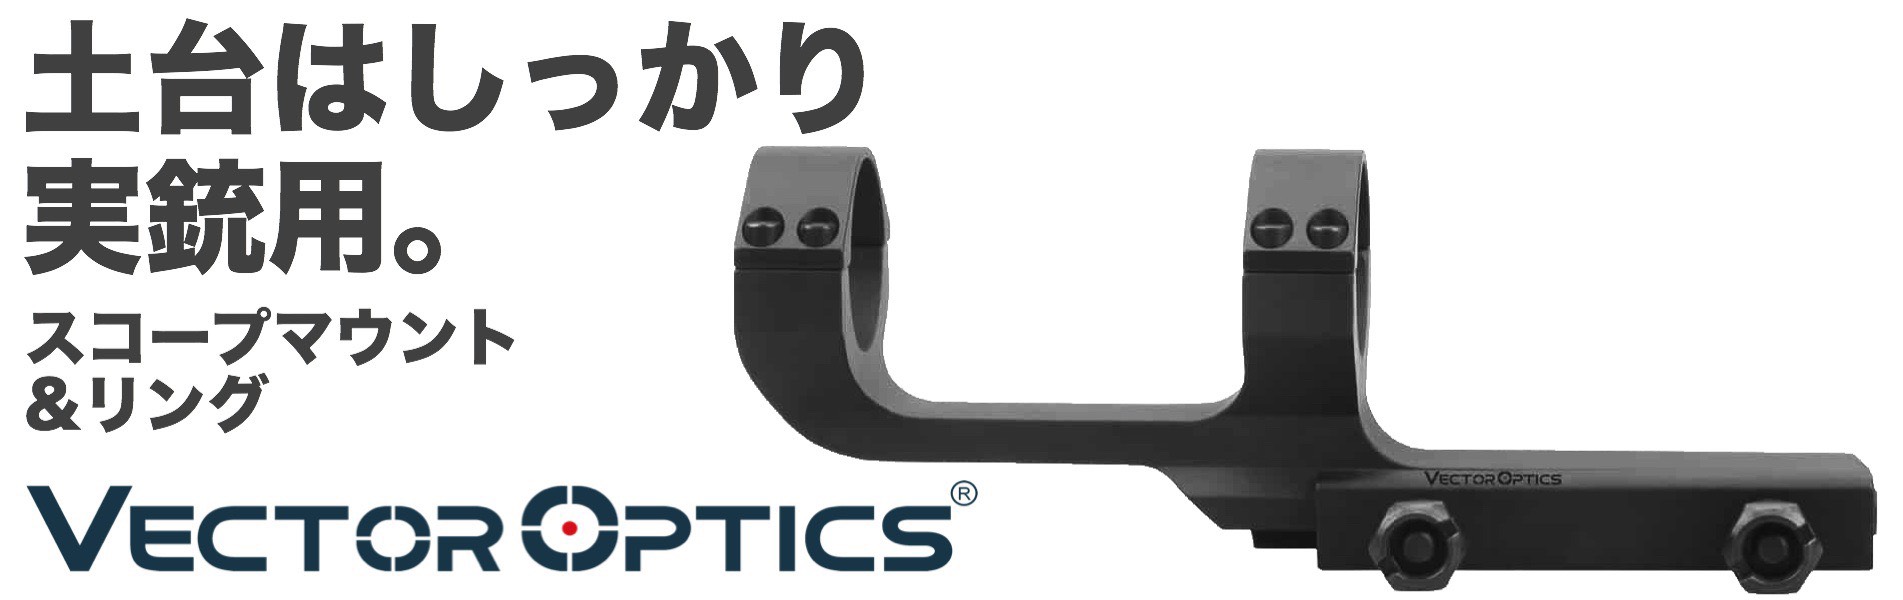 Vector Optics 日本公式サイト